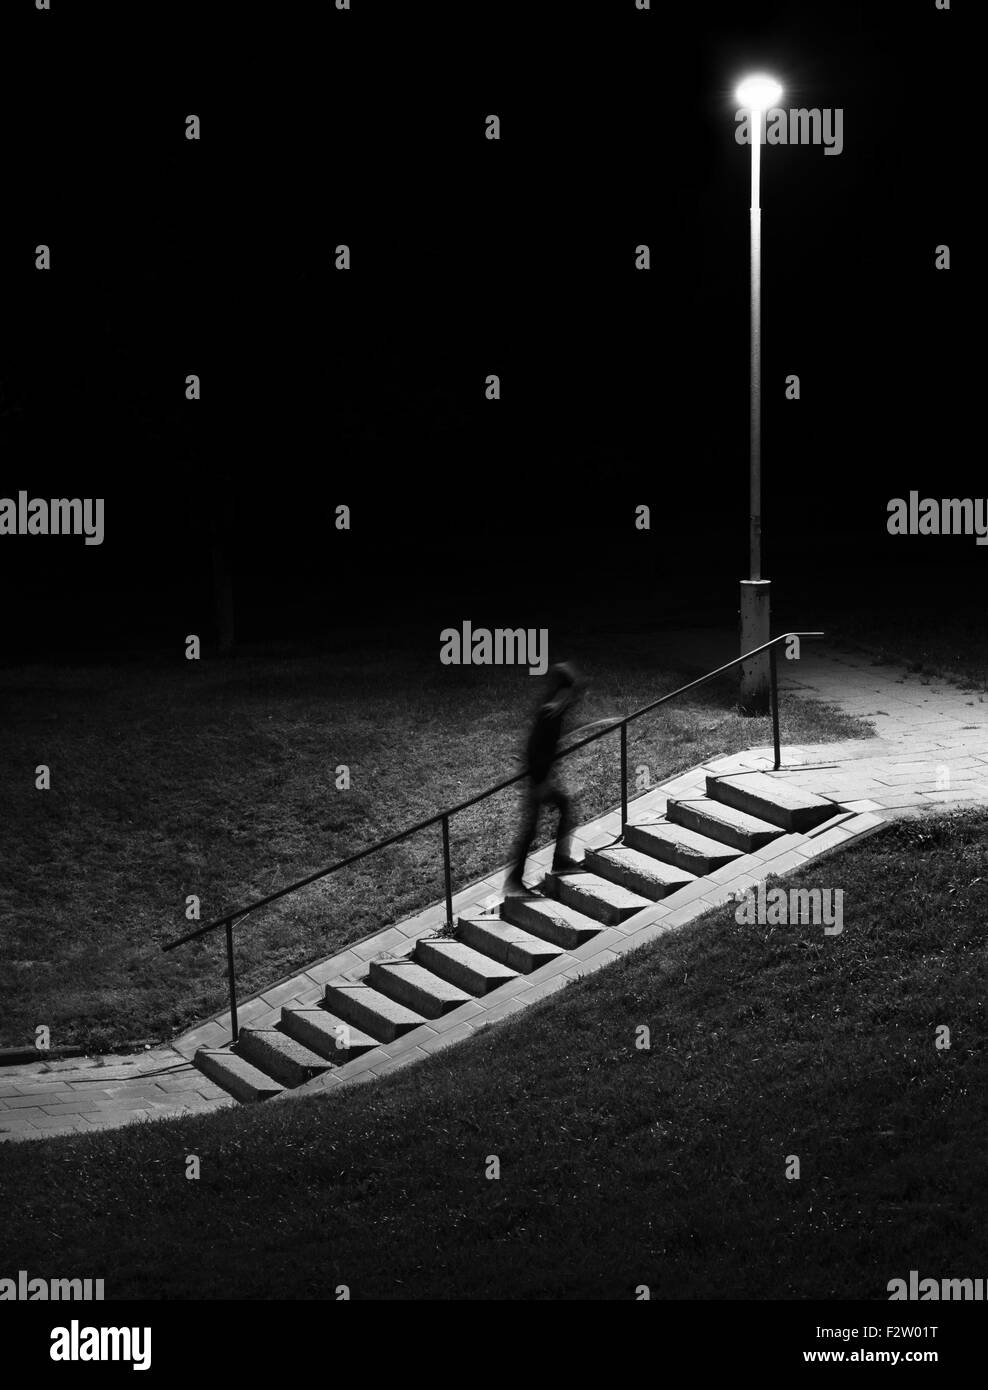 Una escena nocturna. Figura Humana en motion blur subir escaleras. Foto de stock